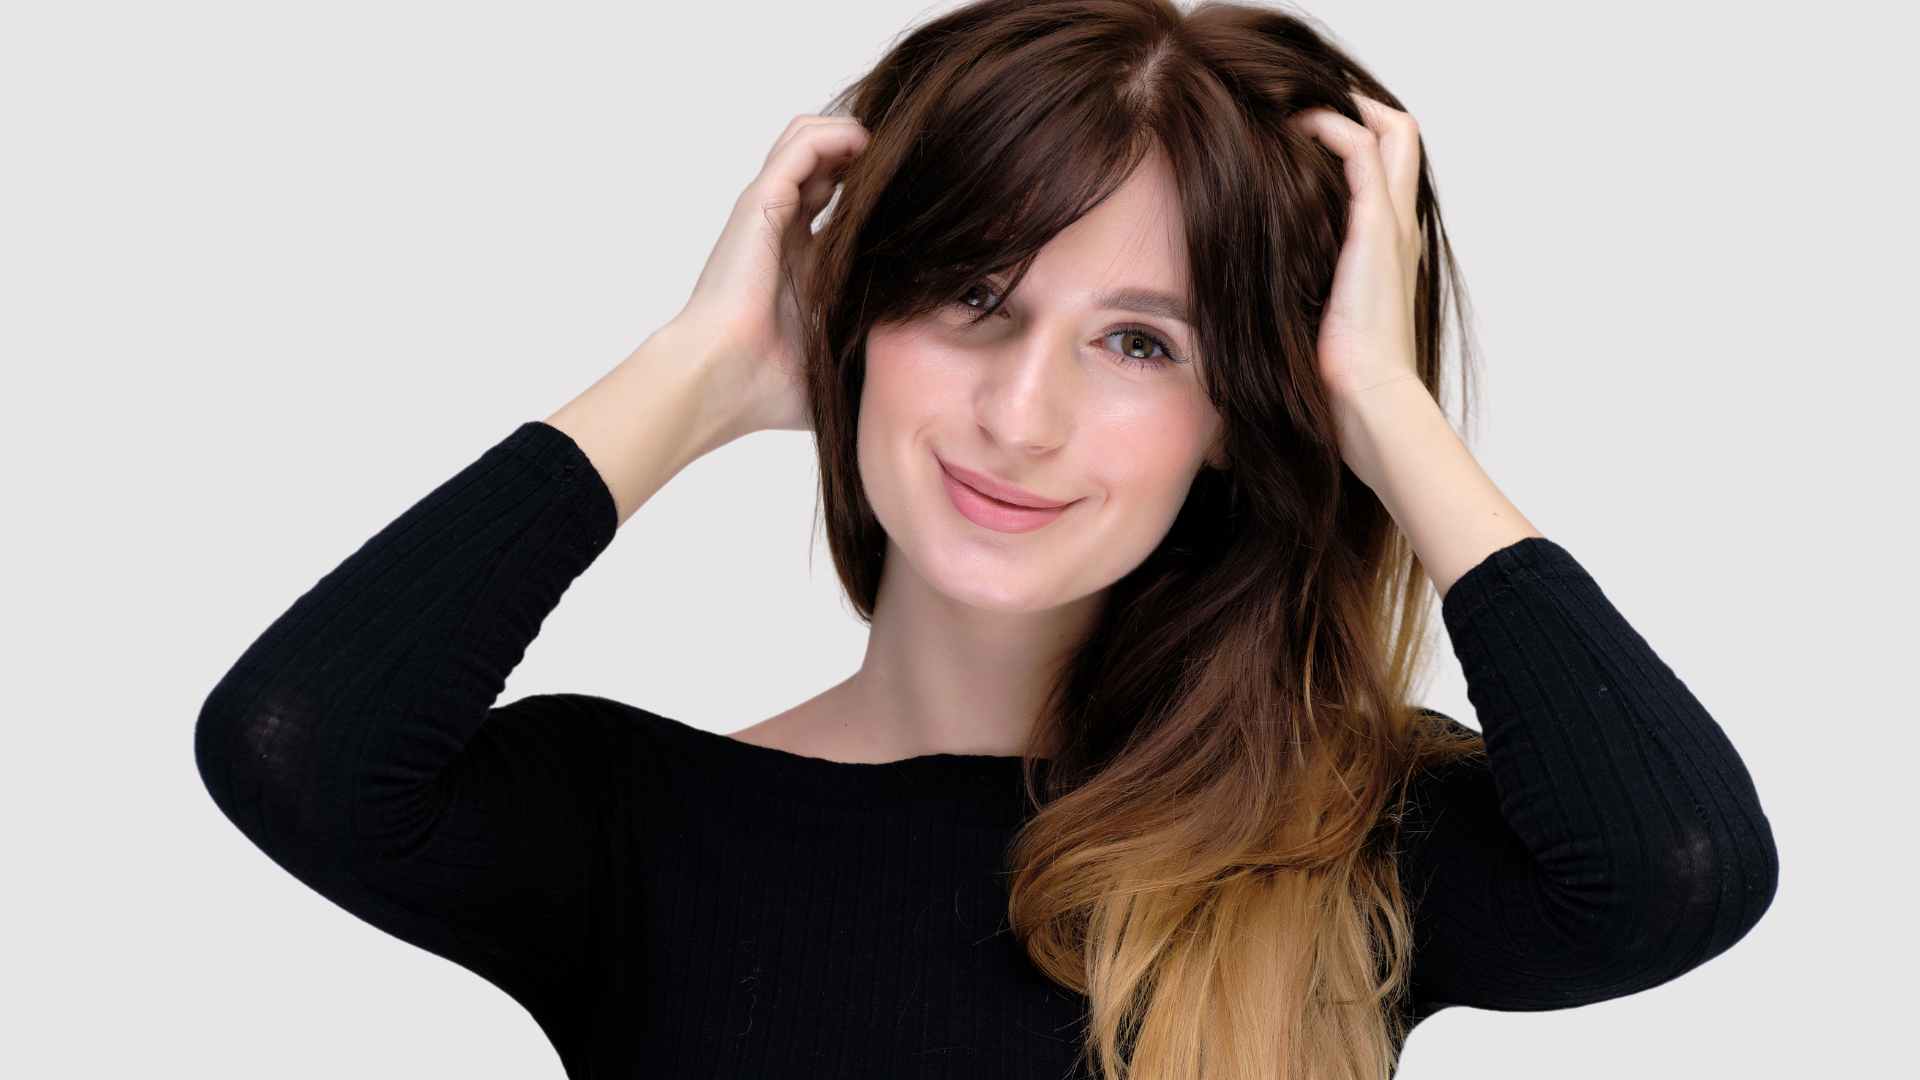 Frizzy Hair: Female with long dark frizz free hair